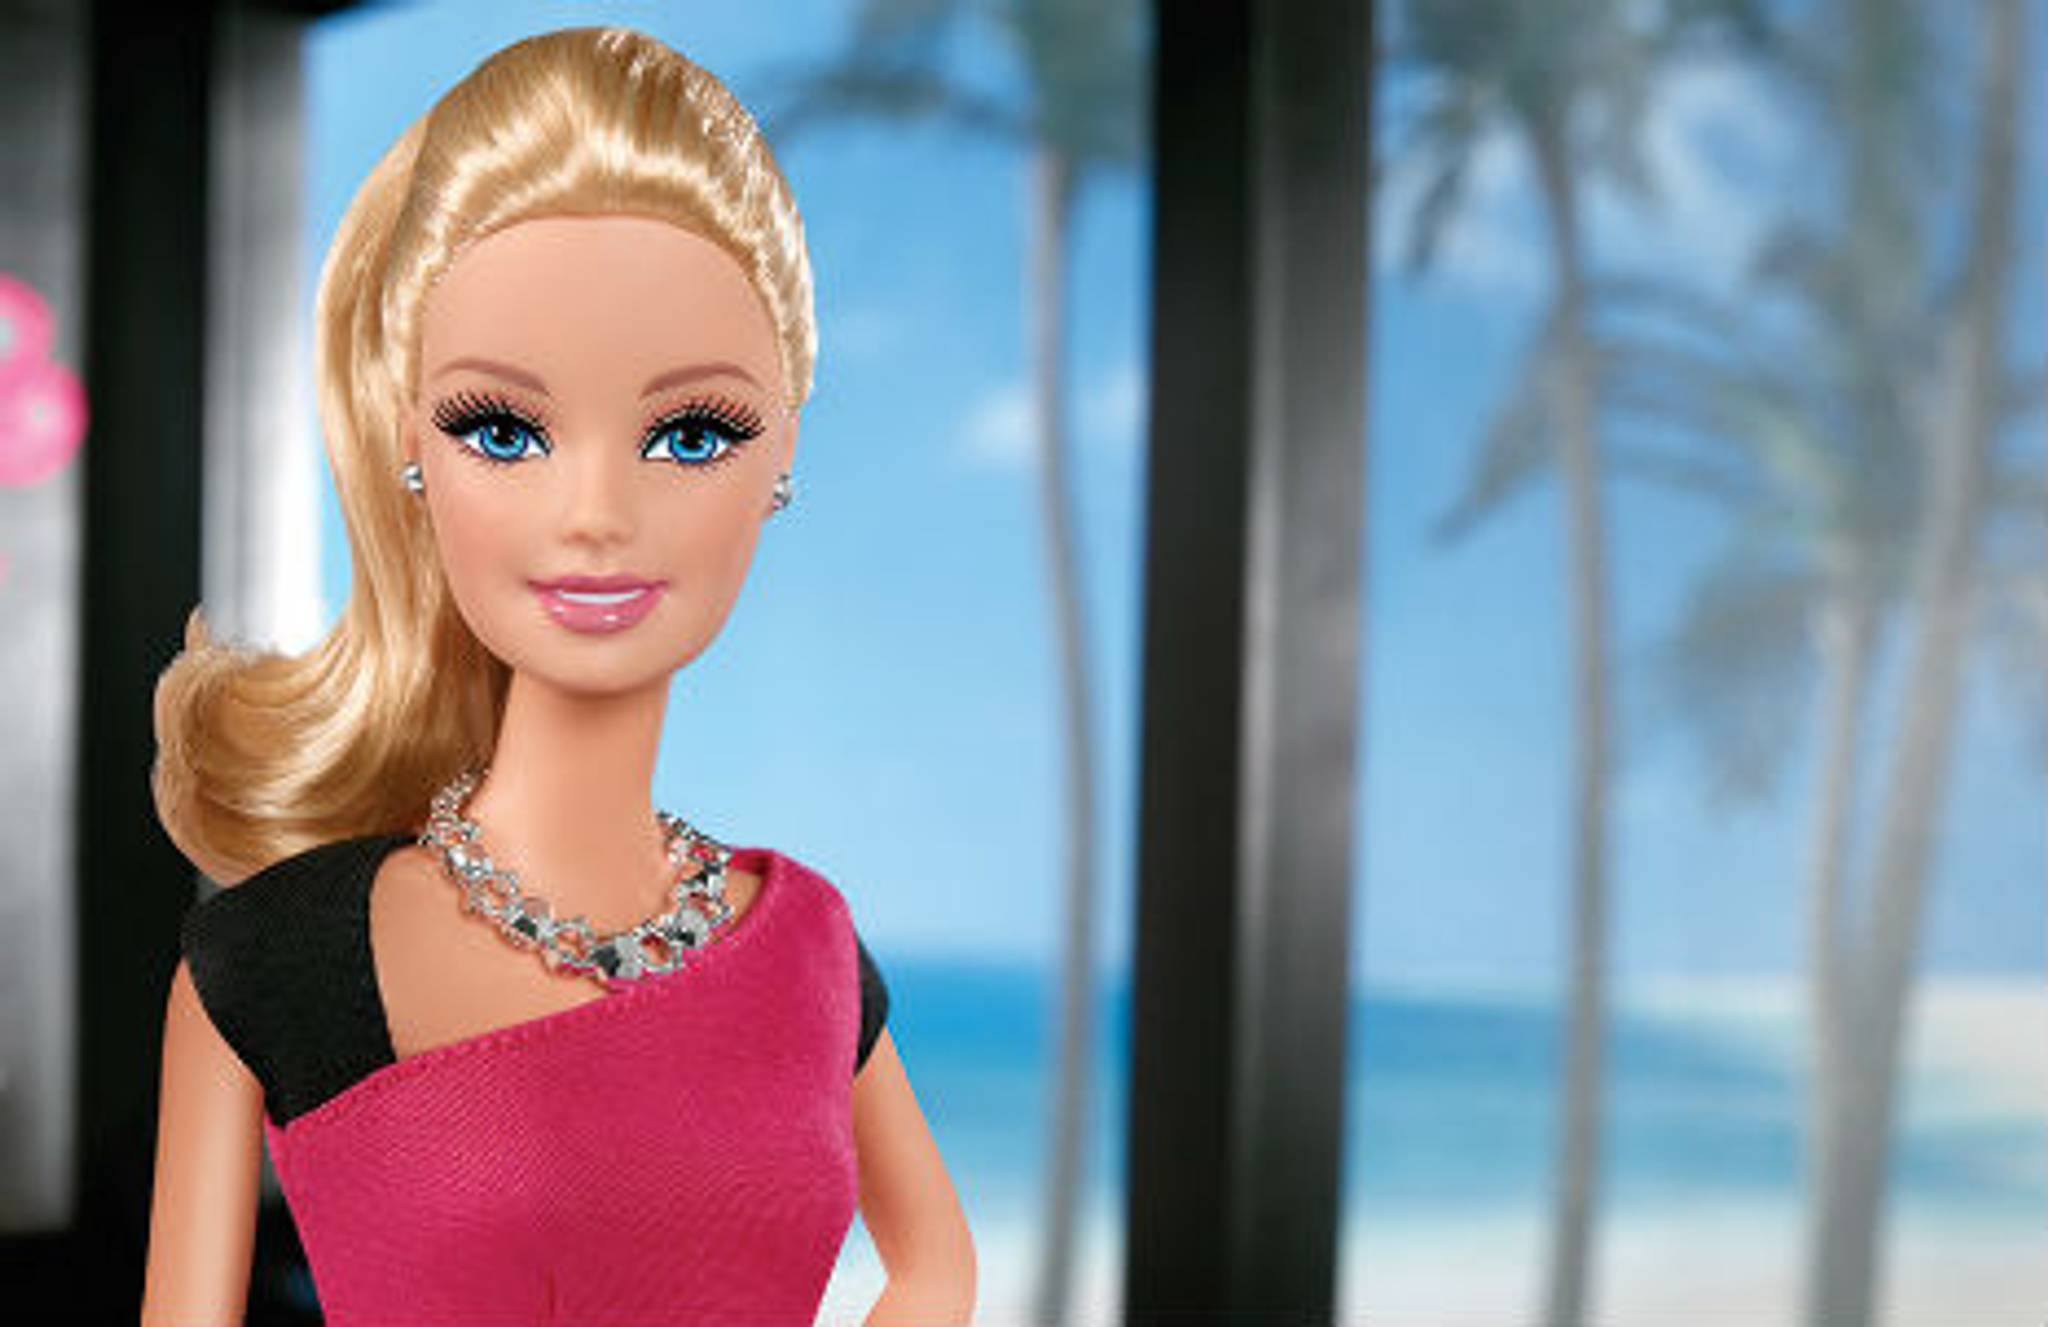 Barbie is now on LinkedIn